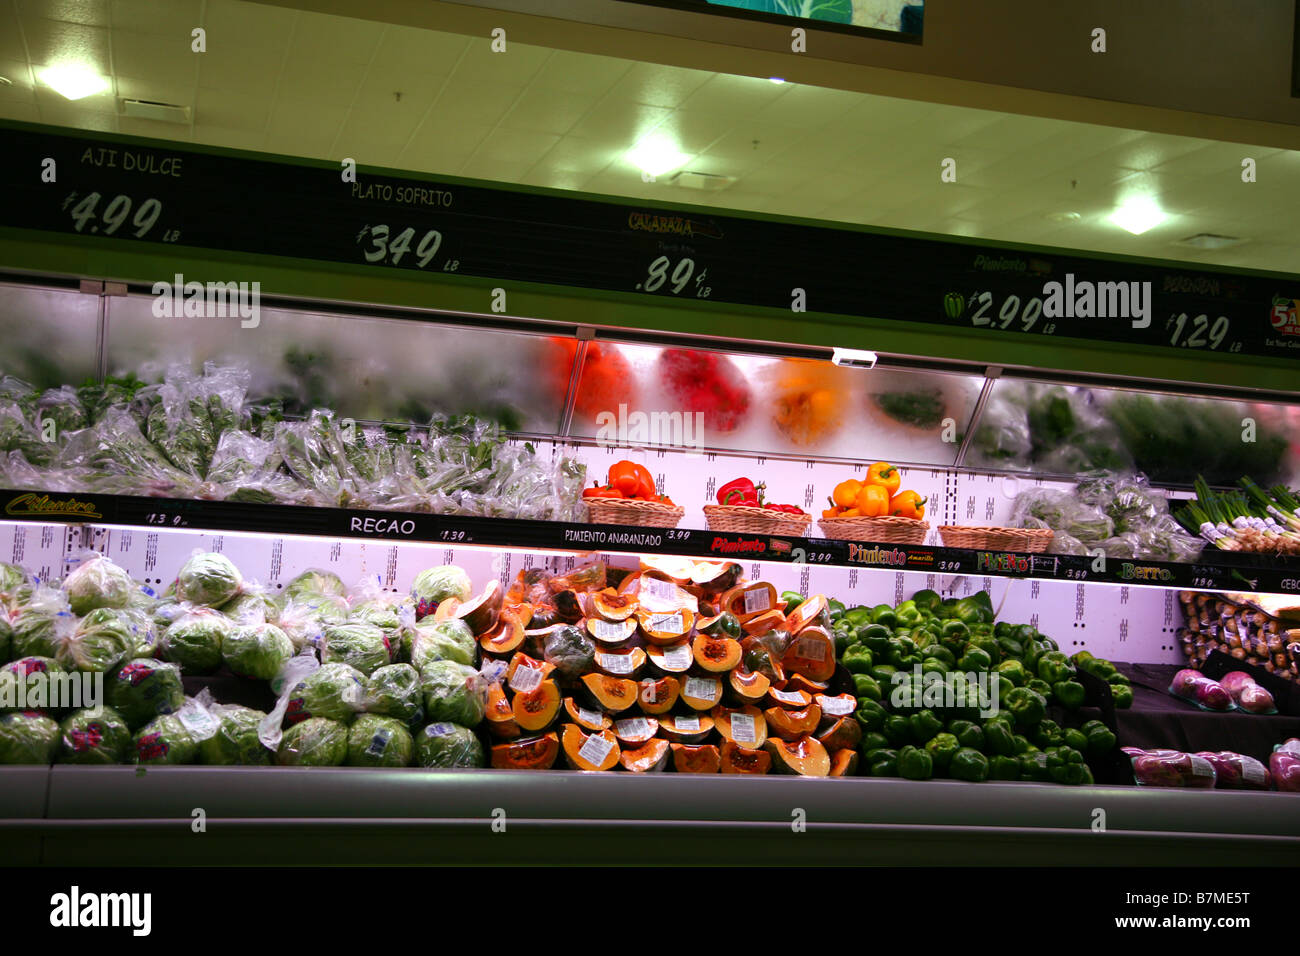 Produce section of a supermarket, Naguabo, Puerto Rico, USA Stock Photo